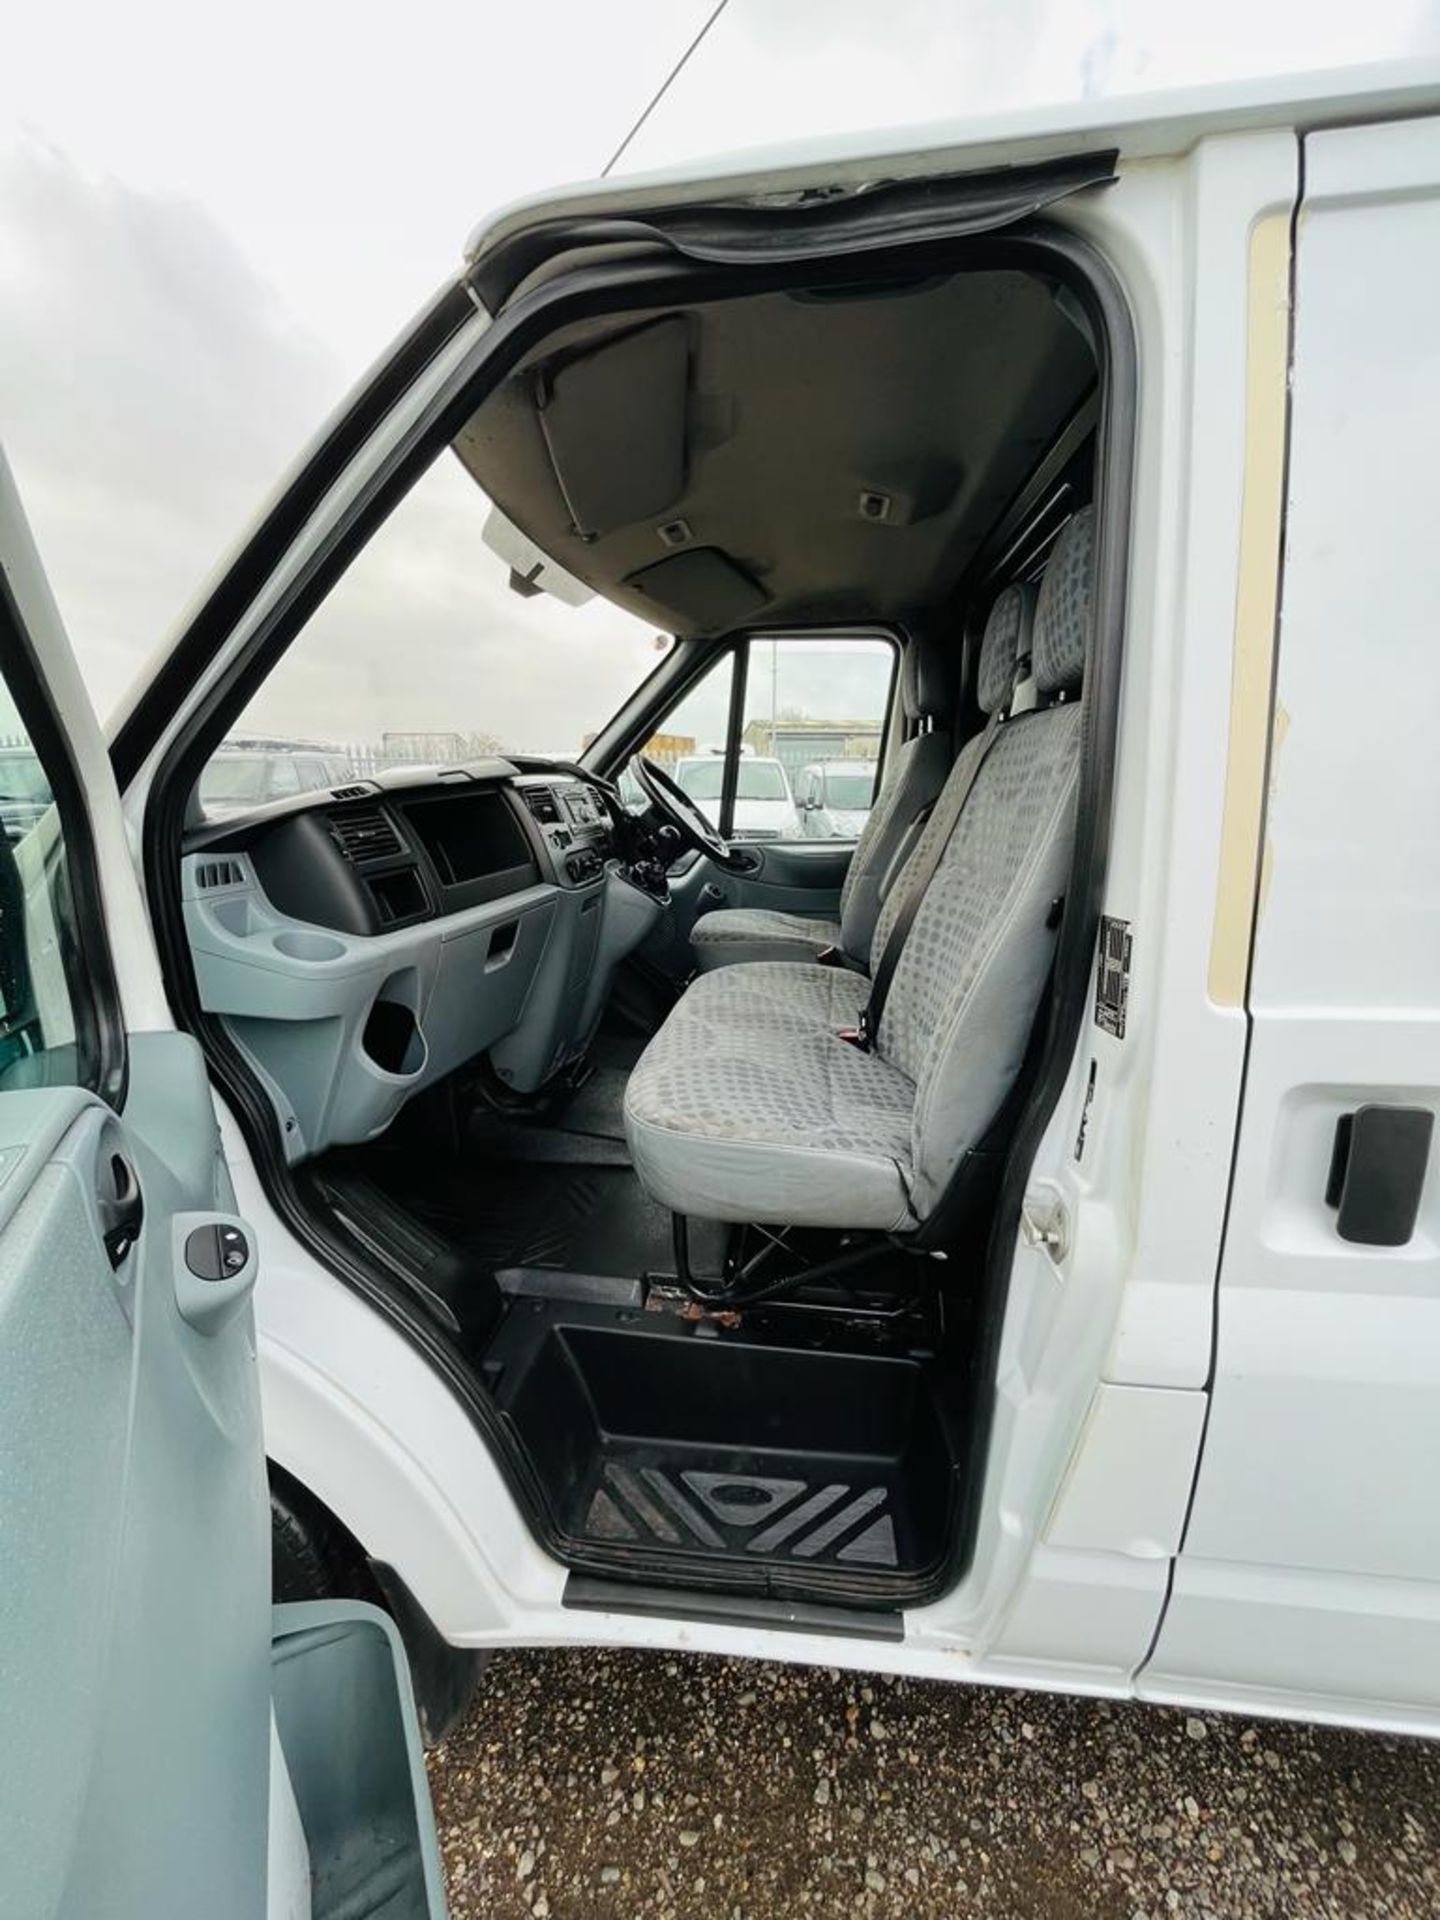 ** ON SALE ** Ford Transit 85 T280 FWD TDCI 2.2 SWB 2011 '11 Reg' - Panel Van - Image 20 of 24